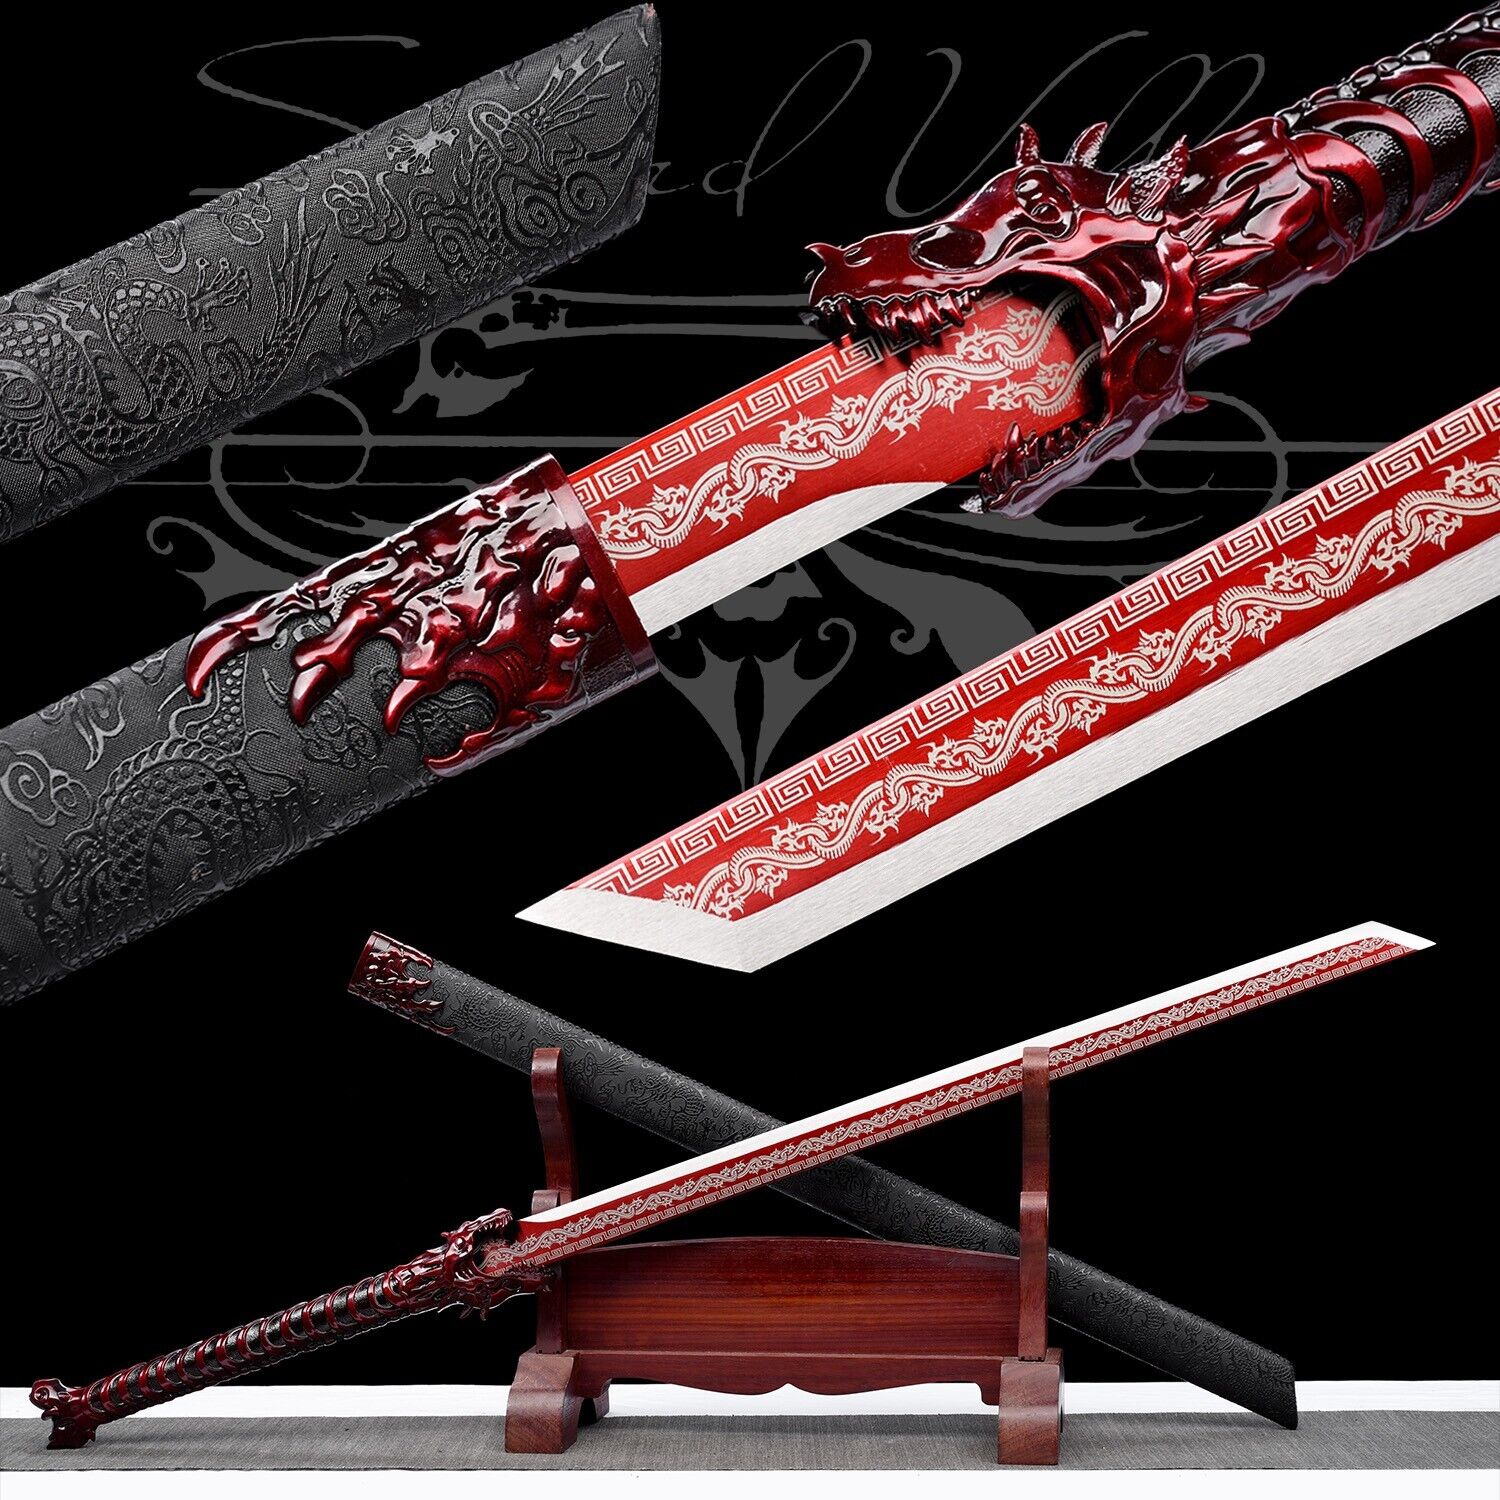 Handmade Katana/Collectible/Dragon Sword/Full Tang/Fighting Master/Full Tang